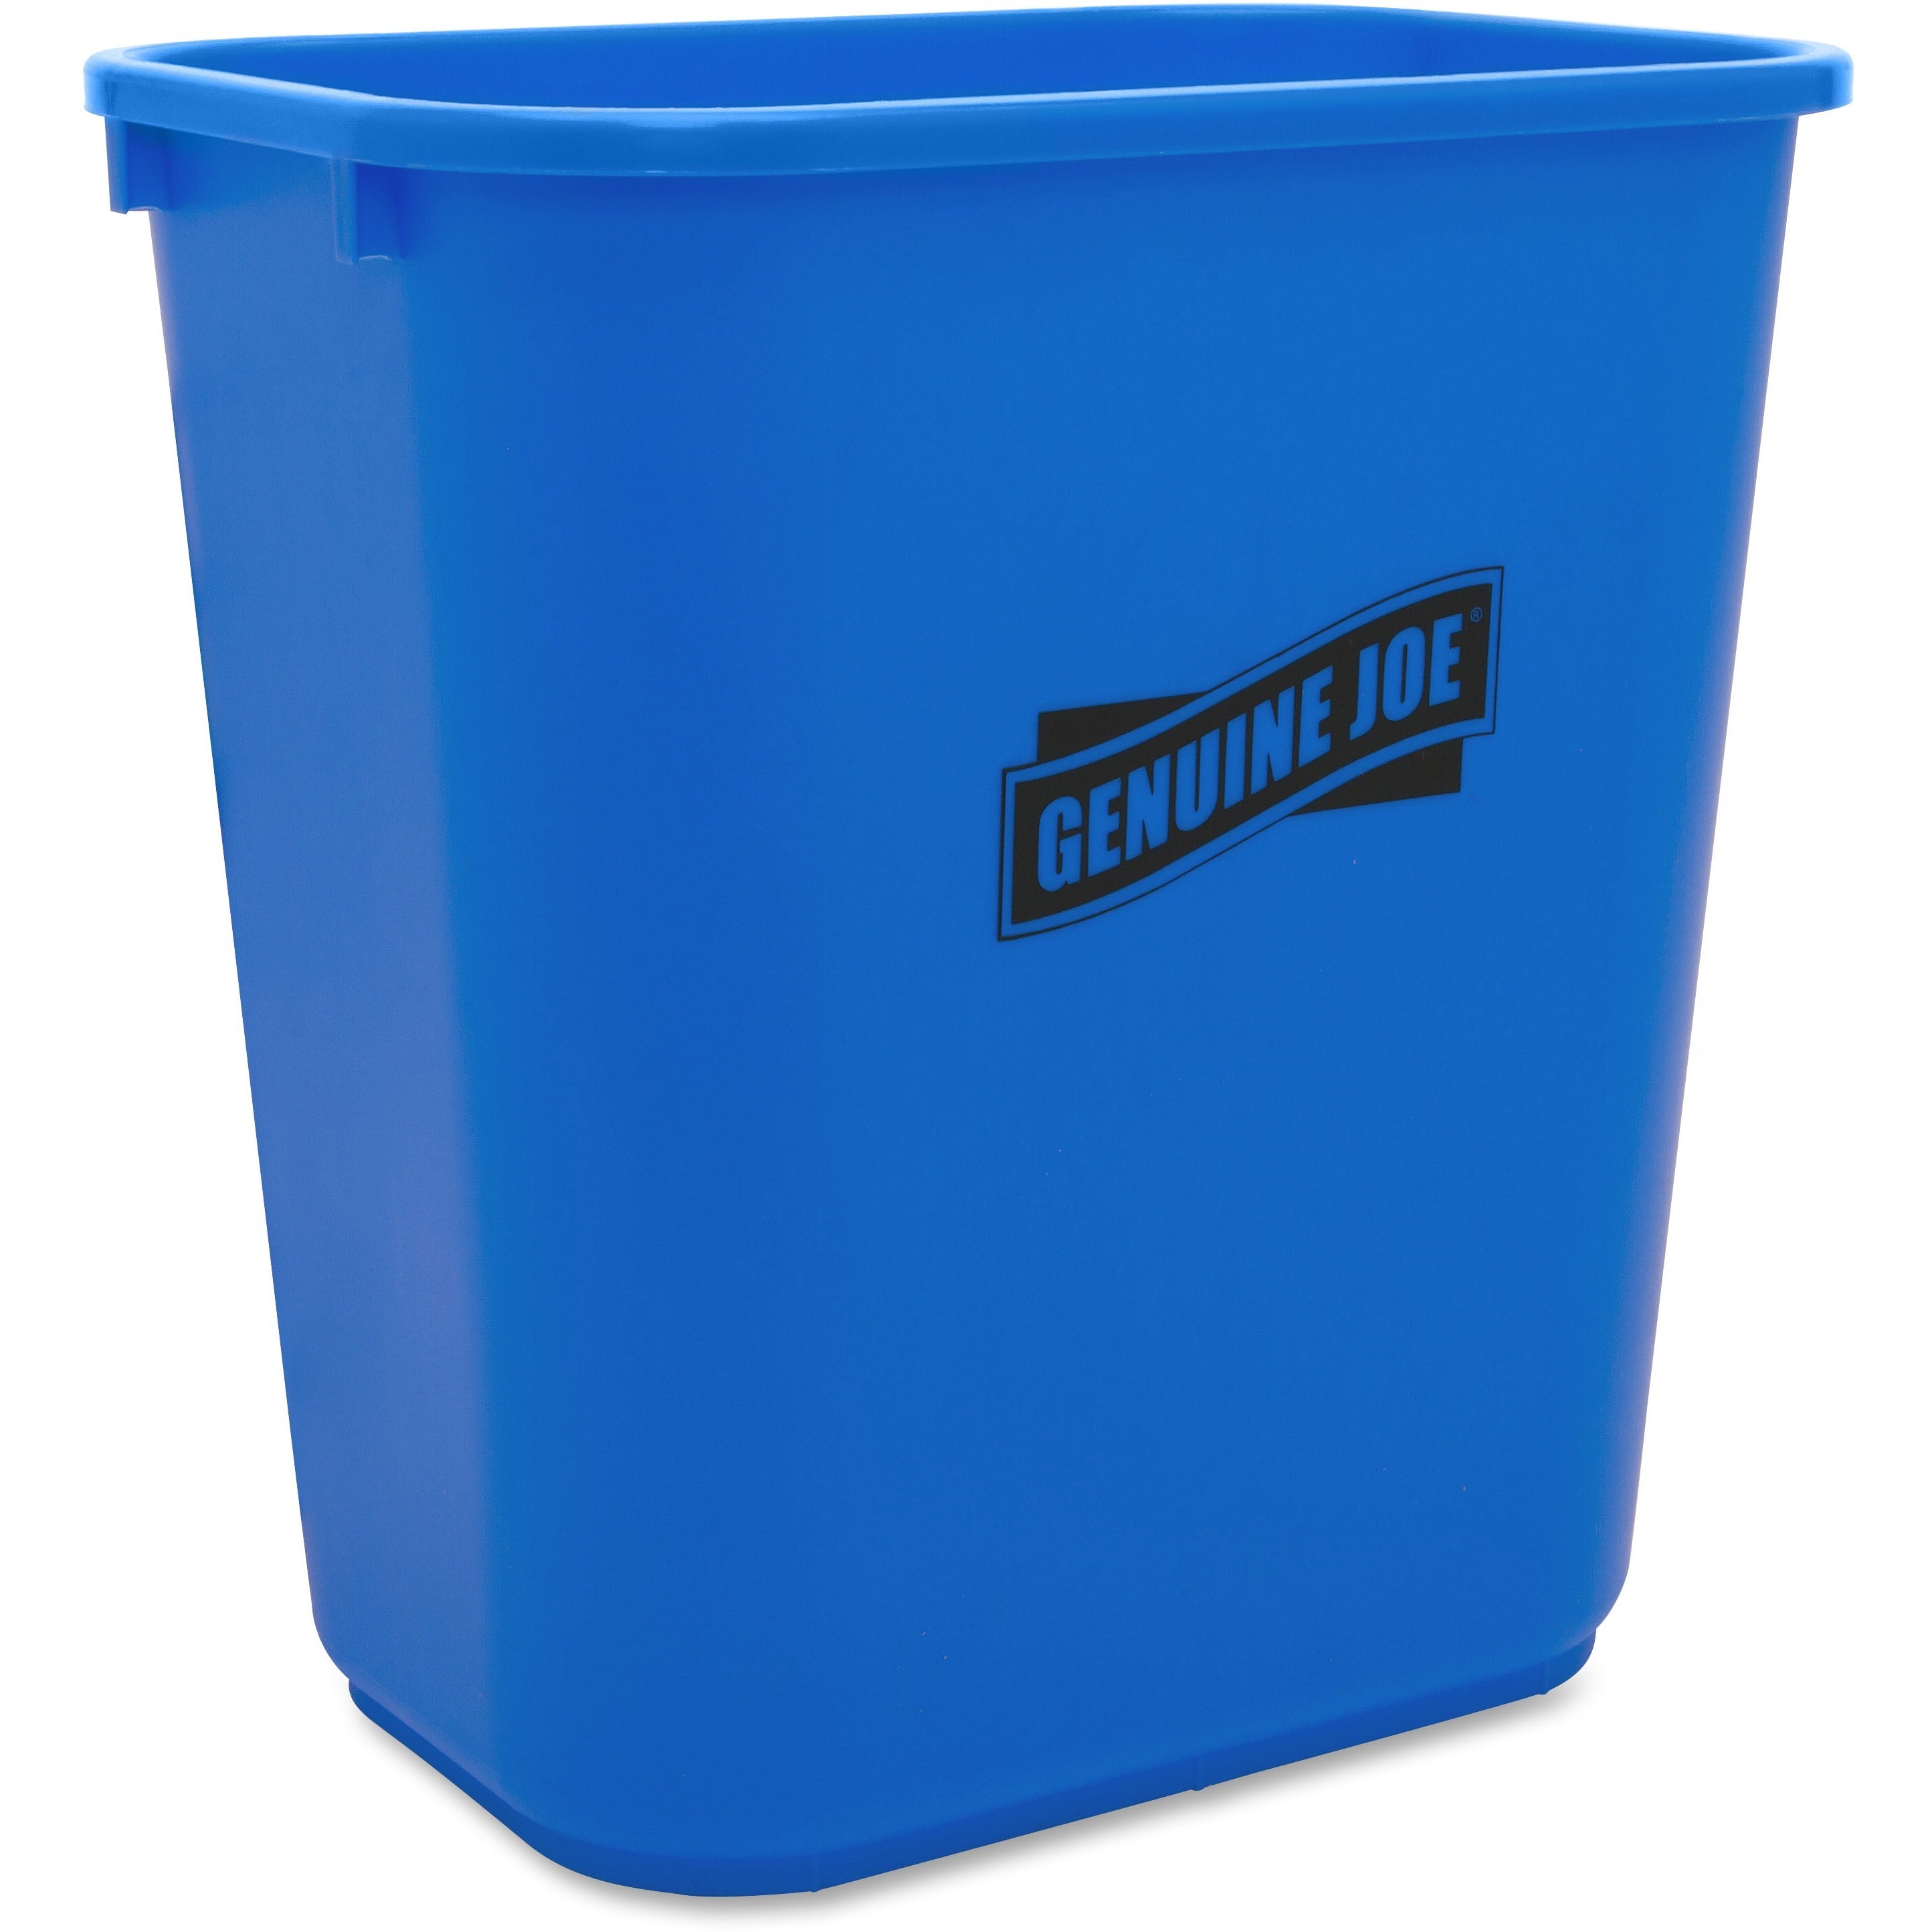 Genuine Joe 28-1/2 Quart Recycle Wastebasket - 7.13 gal Capacity - Rectangular - 15" Height x 14.5" Width x 10.5" Depth - Blue, White - 1 Each - 